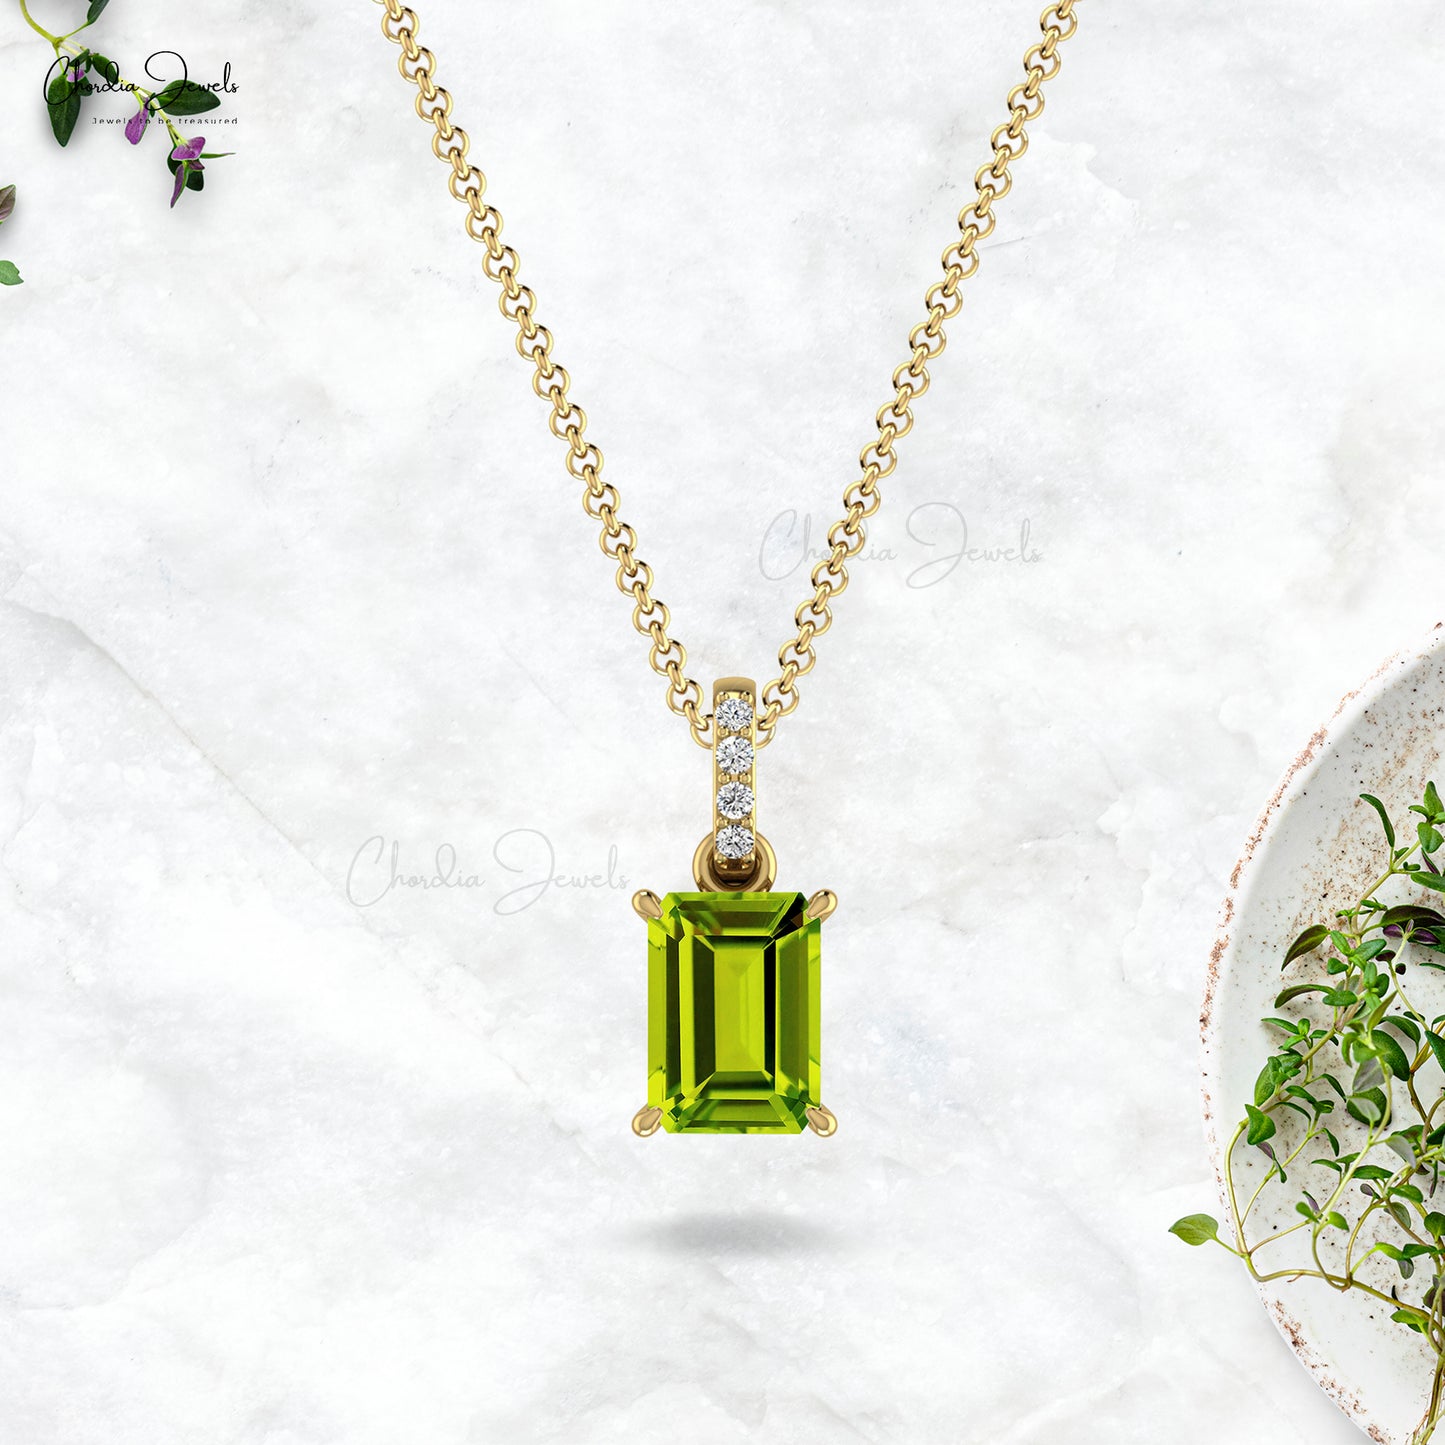 Natural Peridot Pendant 14k Solid Gold Diamond Pendant 7X5mm Emerald Cut Octagon Handmade Dangling Pendant